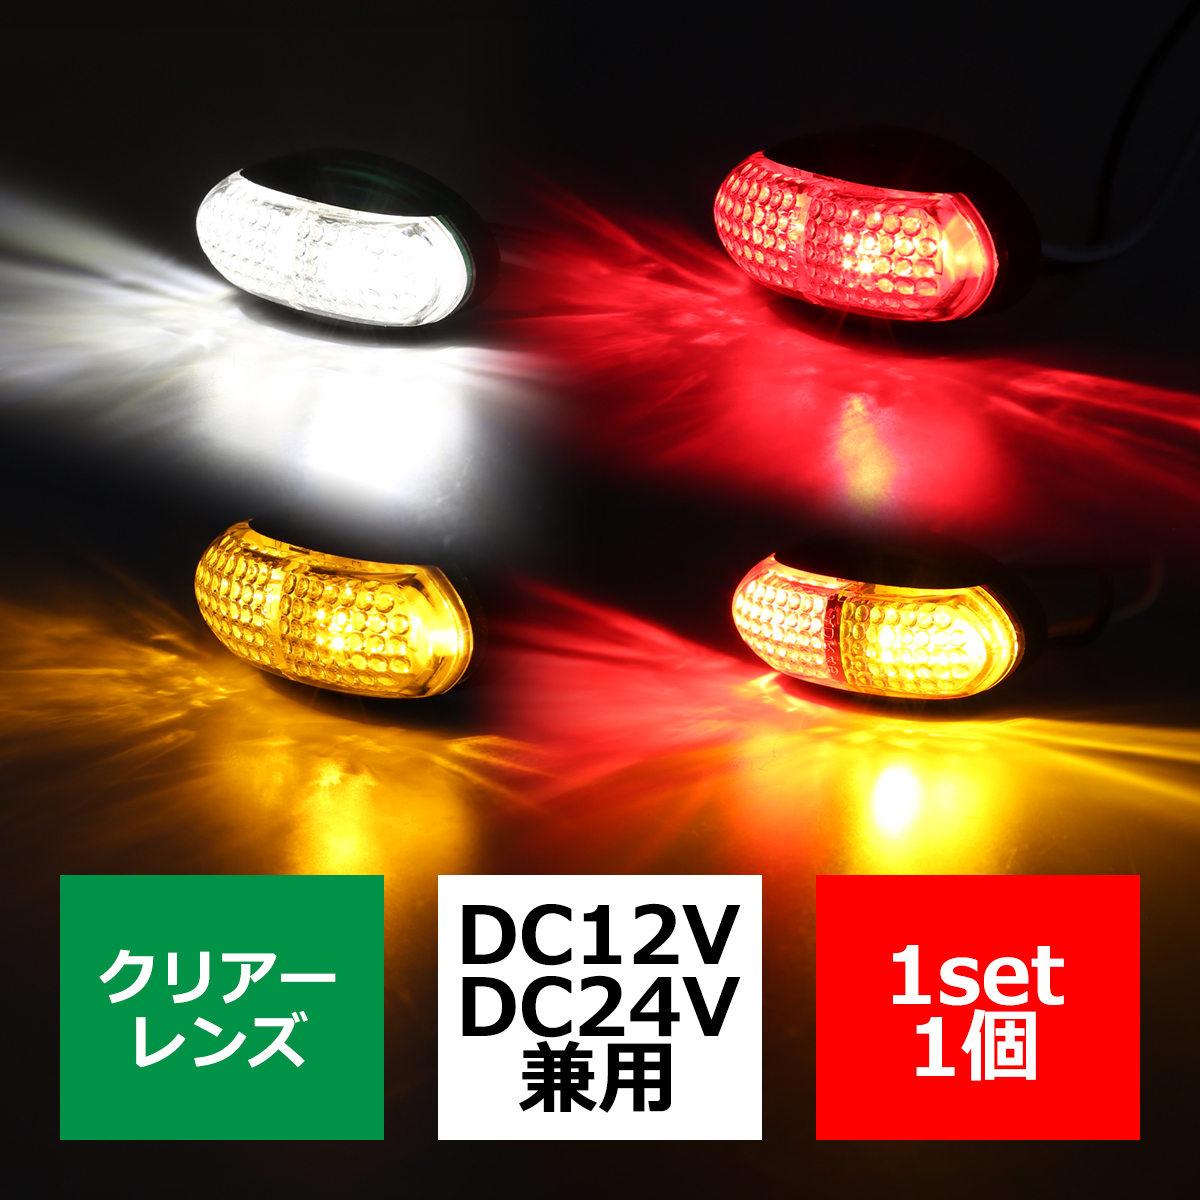 12V 24V 汎用LED 小型 マーカーランプ 防水 拡散型 車高灯 ホワイト